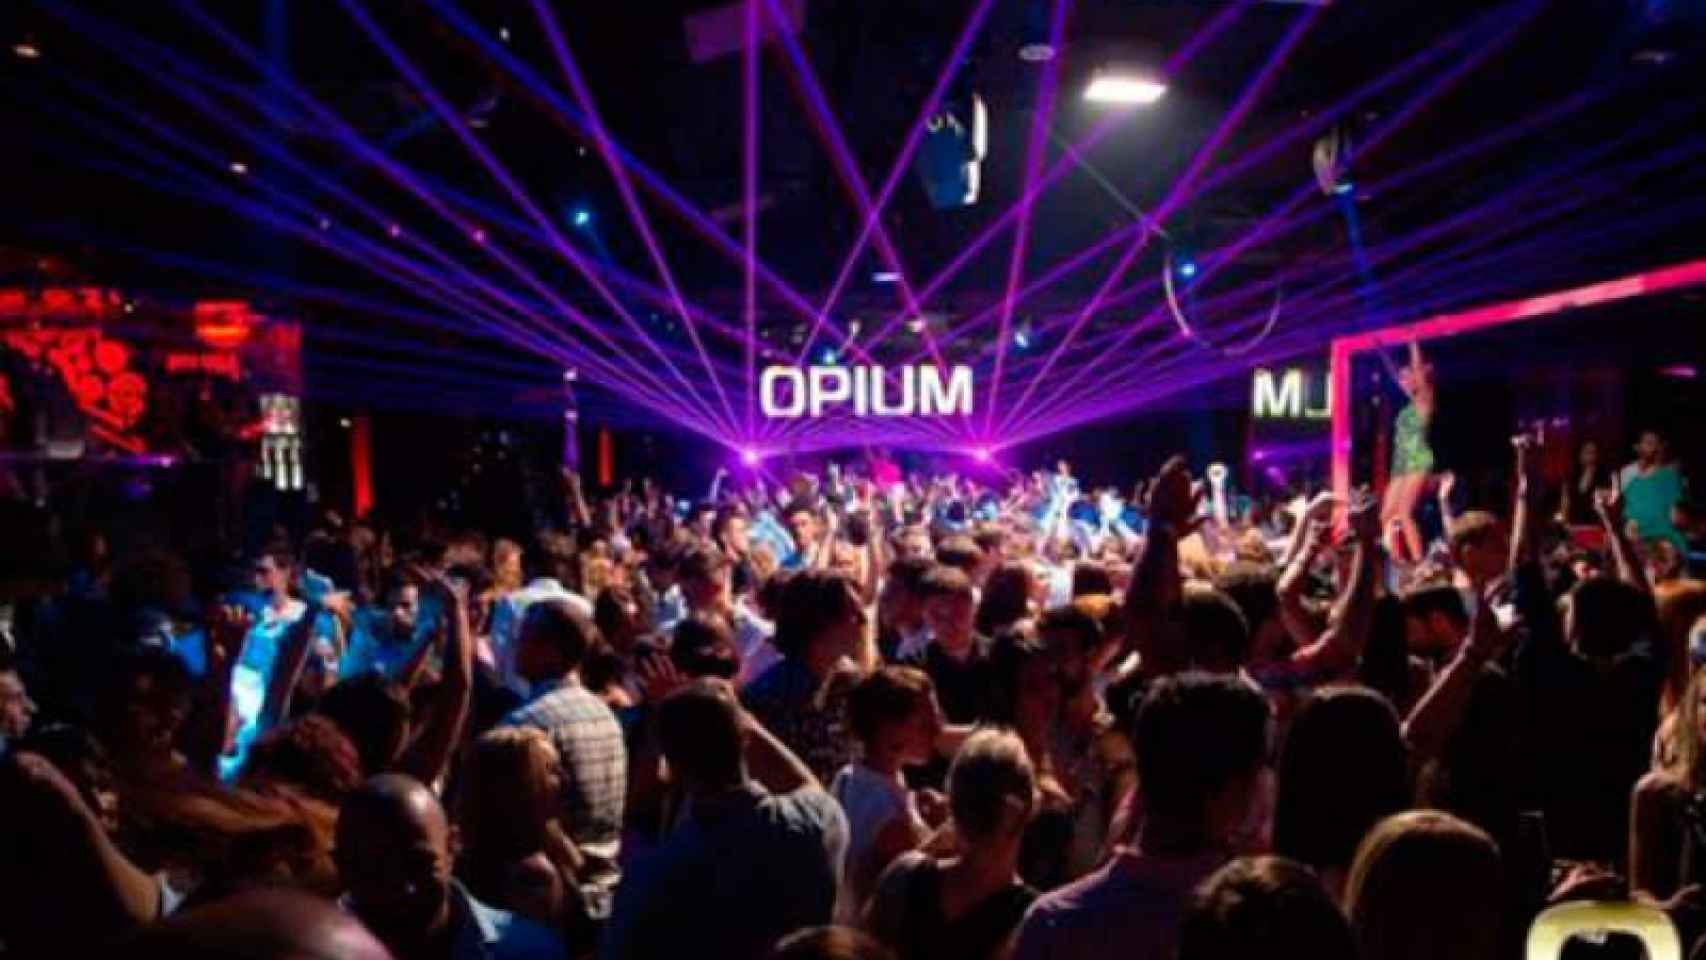 Discoteca Opium Barcelona, de la que Neymar es asiduo